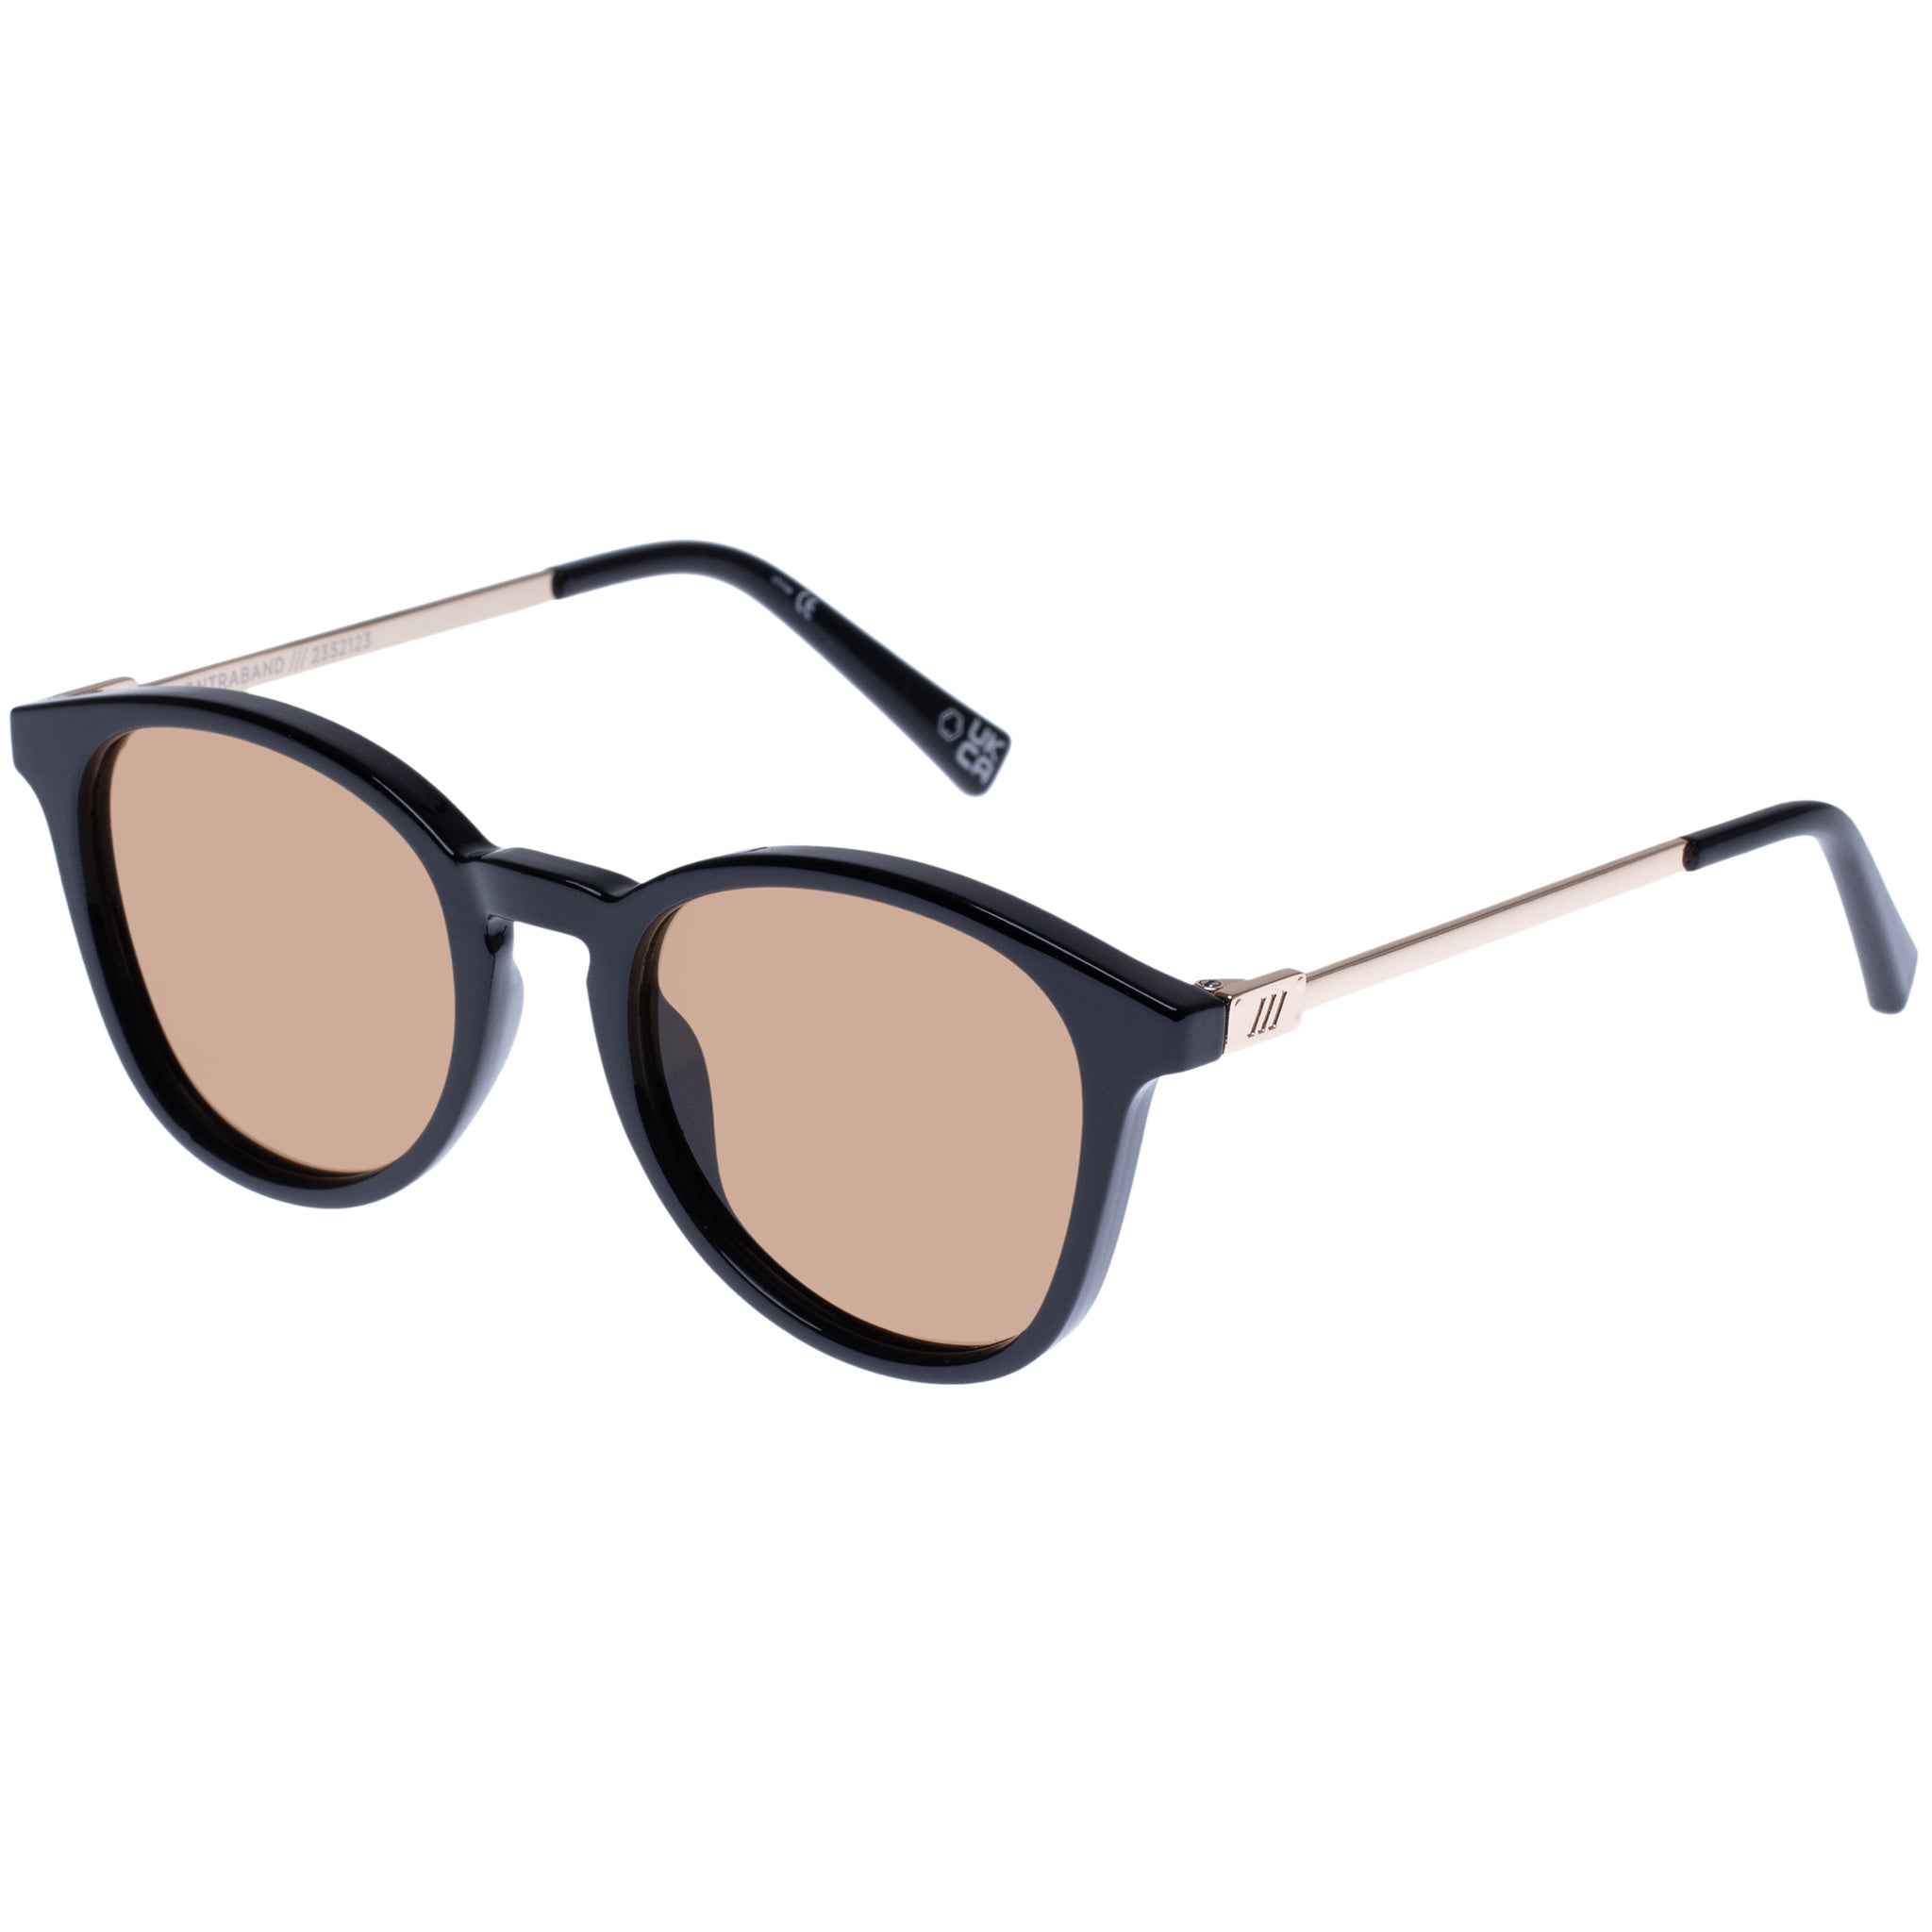 Le Specs Contraband Sunglasses - Shiny Black